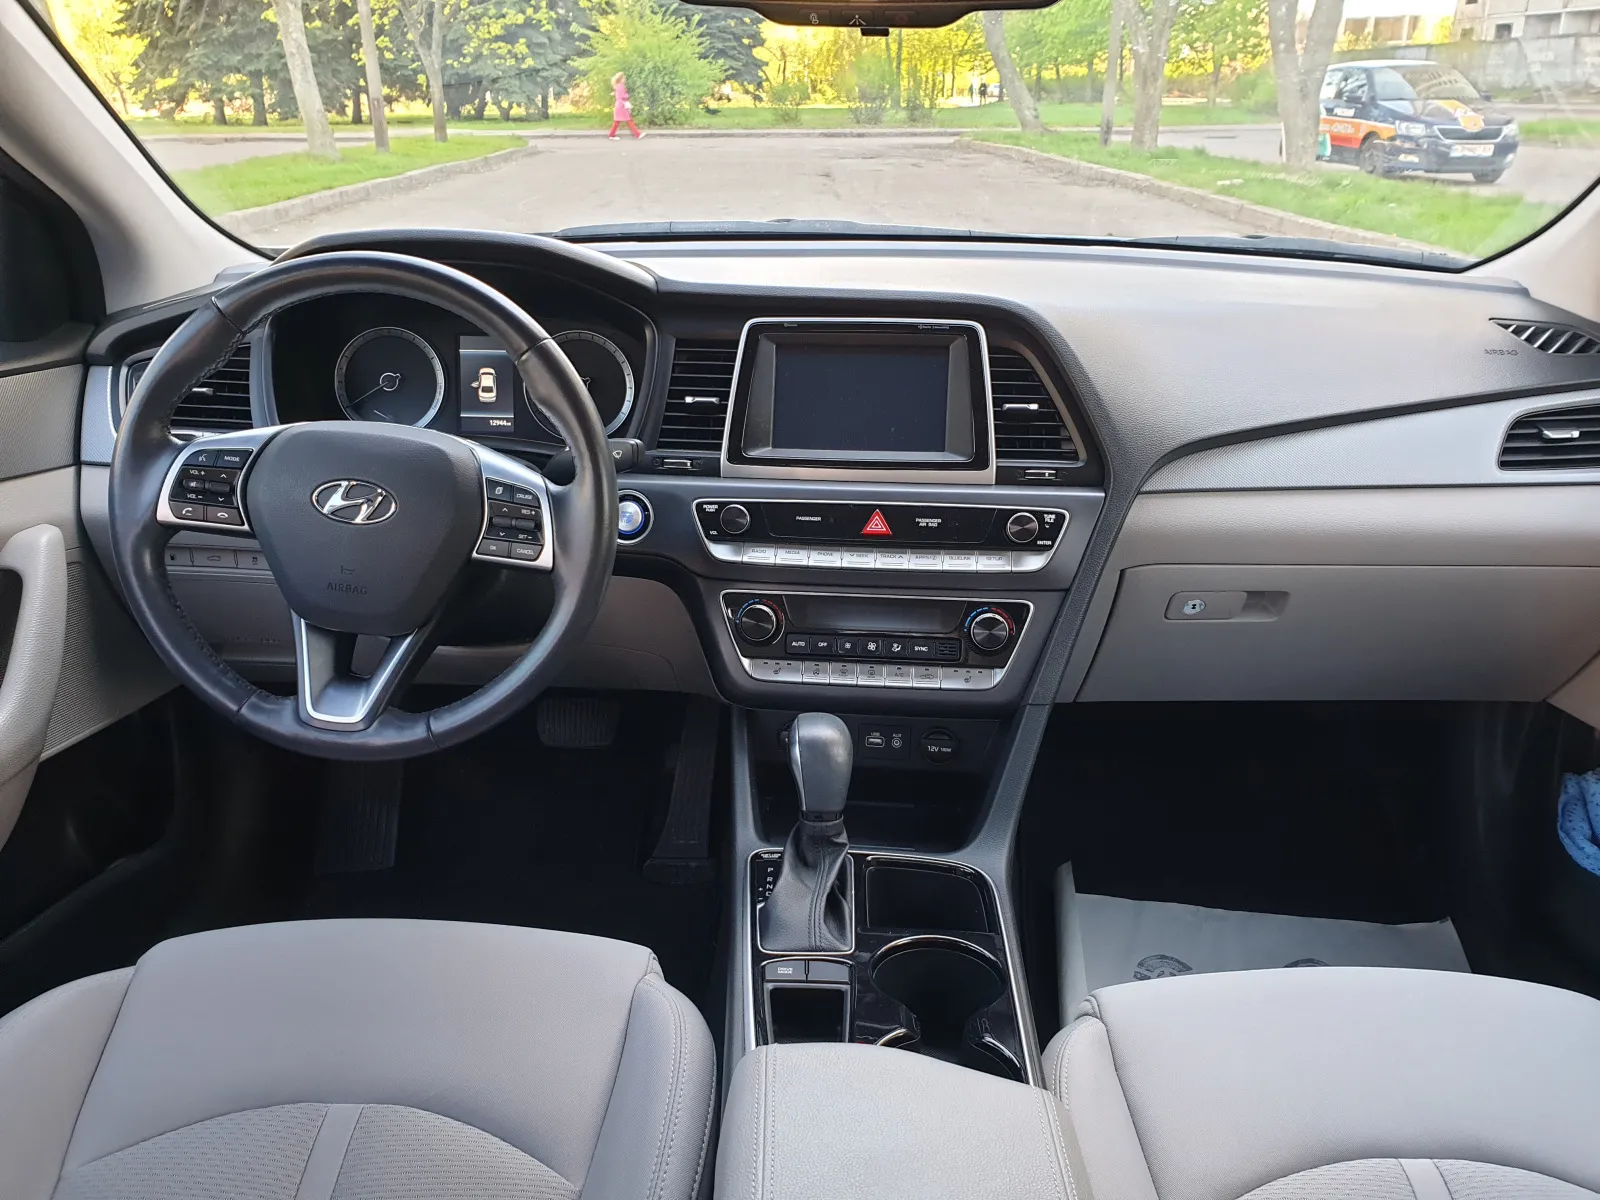 Hyundai Sonata 2019 купити авто в лізинг